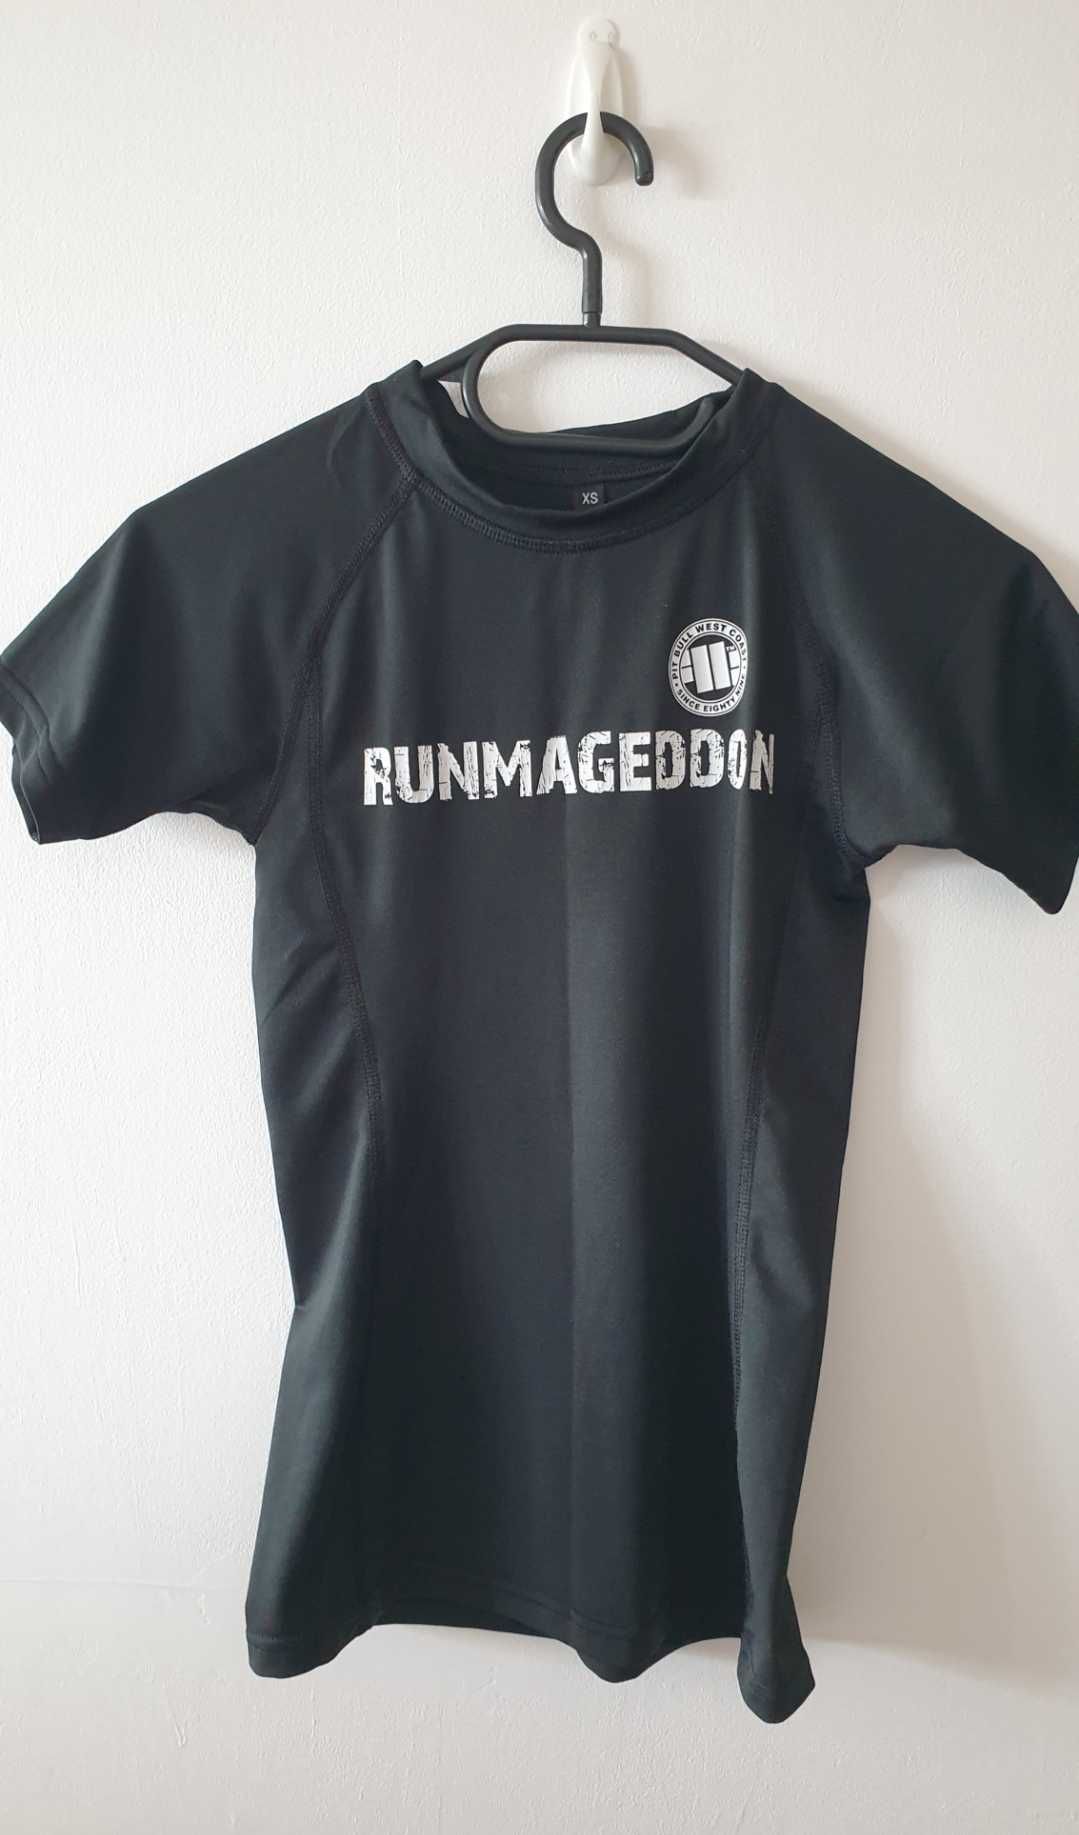 Nowa Koszulka Runmageddon Pit Bull oryginalna damska t-shirt XS